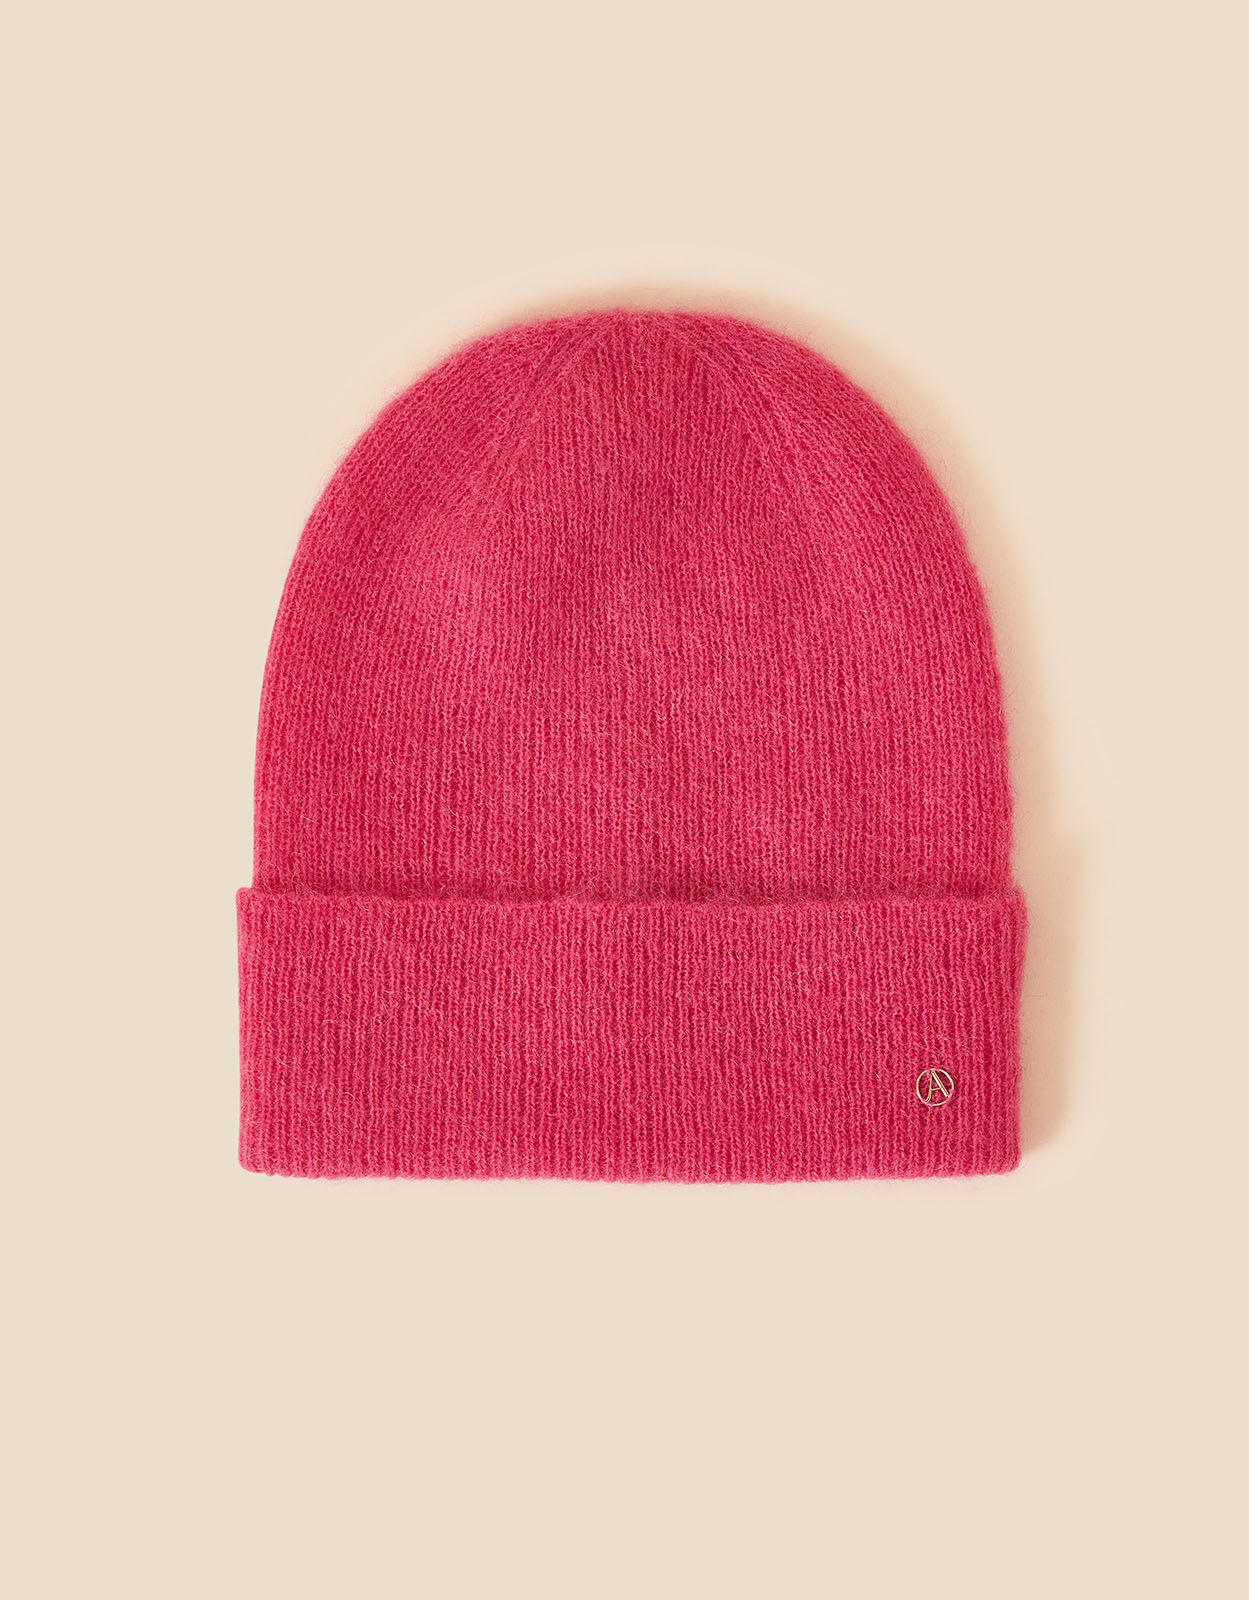 Big Pink Curler Hat With Multiple Hair Color Choices Accessoires Hoeden & petten Wintermutsen Skull caps & beanies 